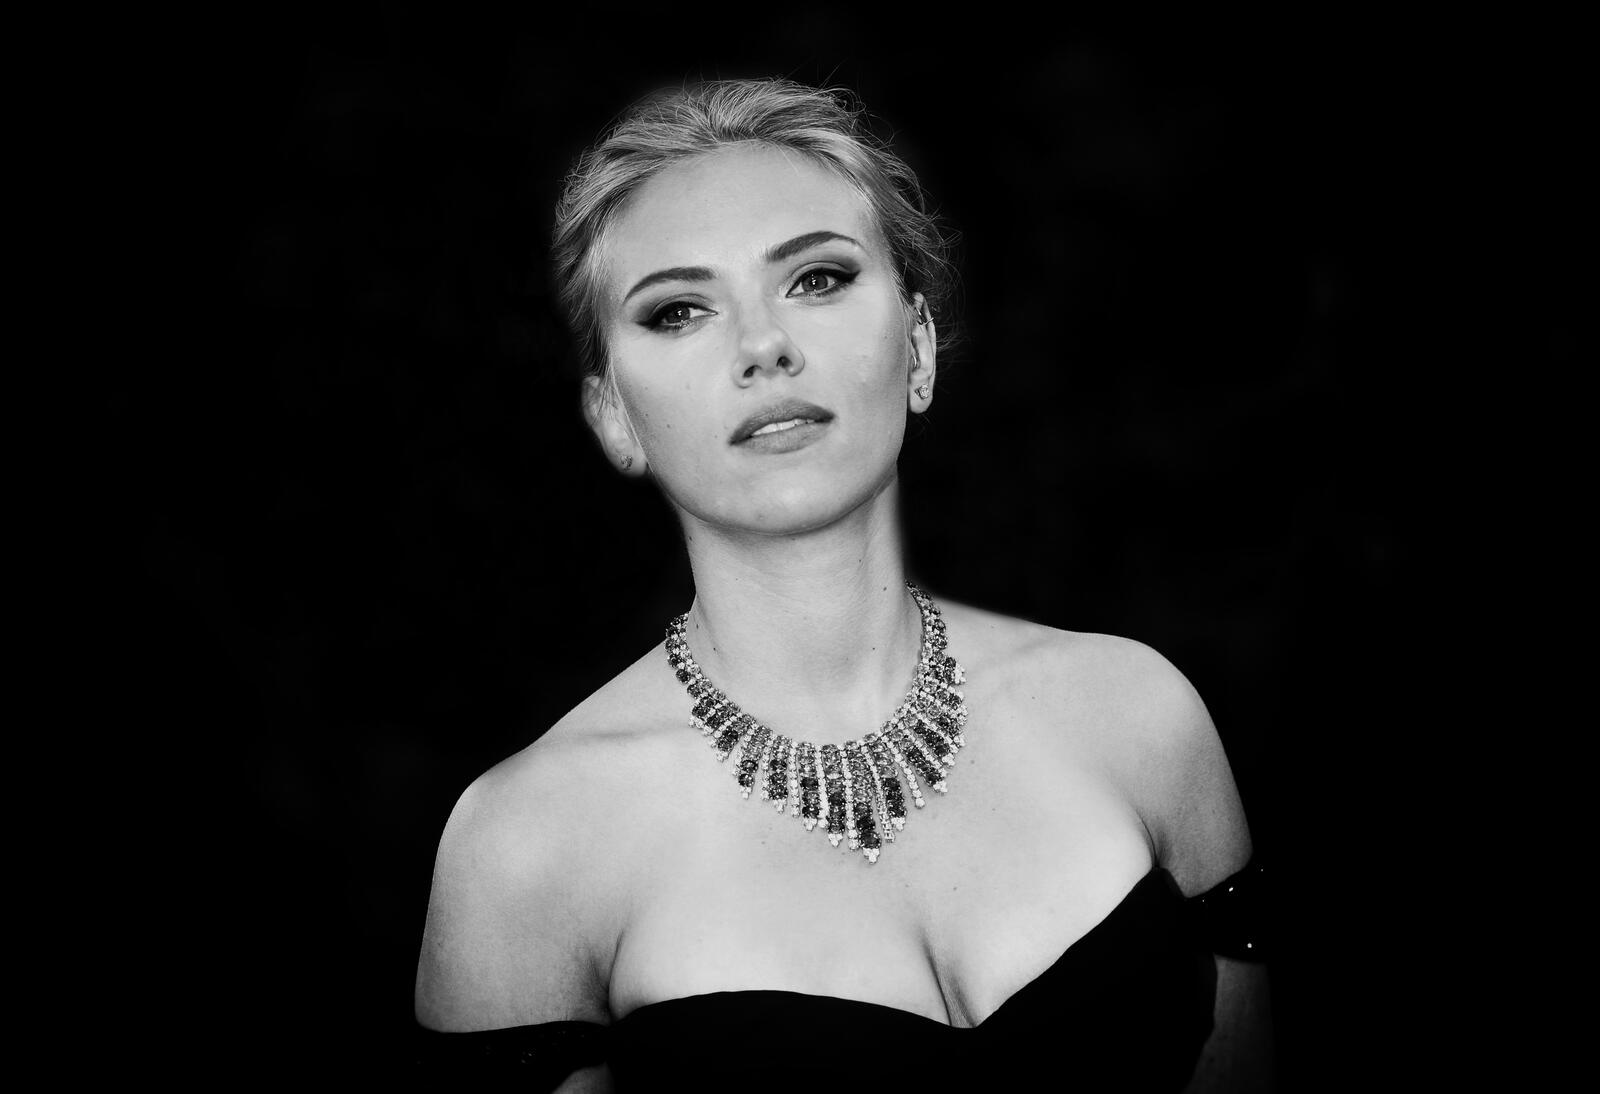 Free photo Scarlett Johansson in a black dress against a dark background